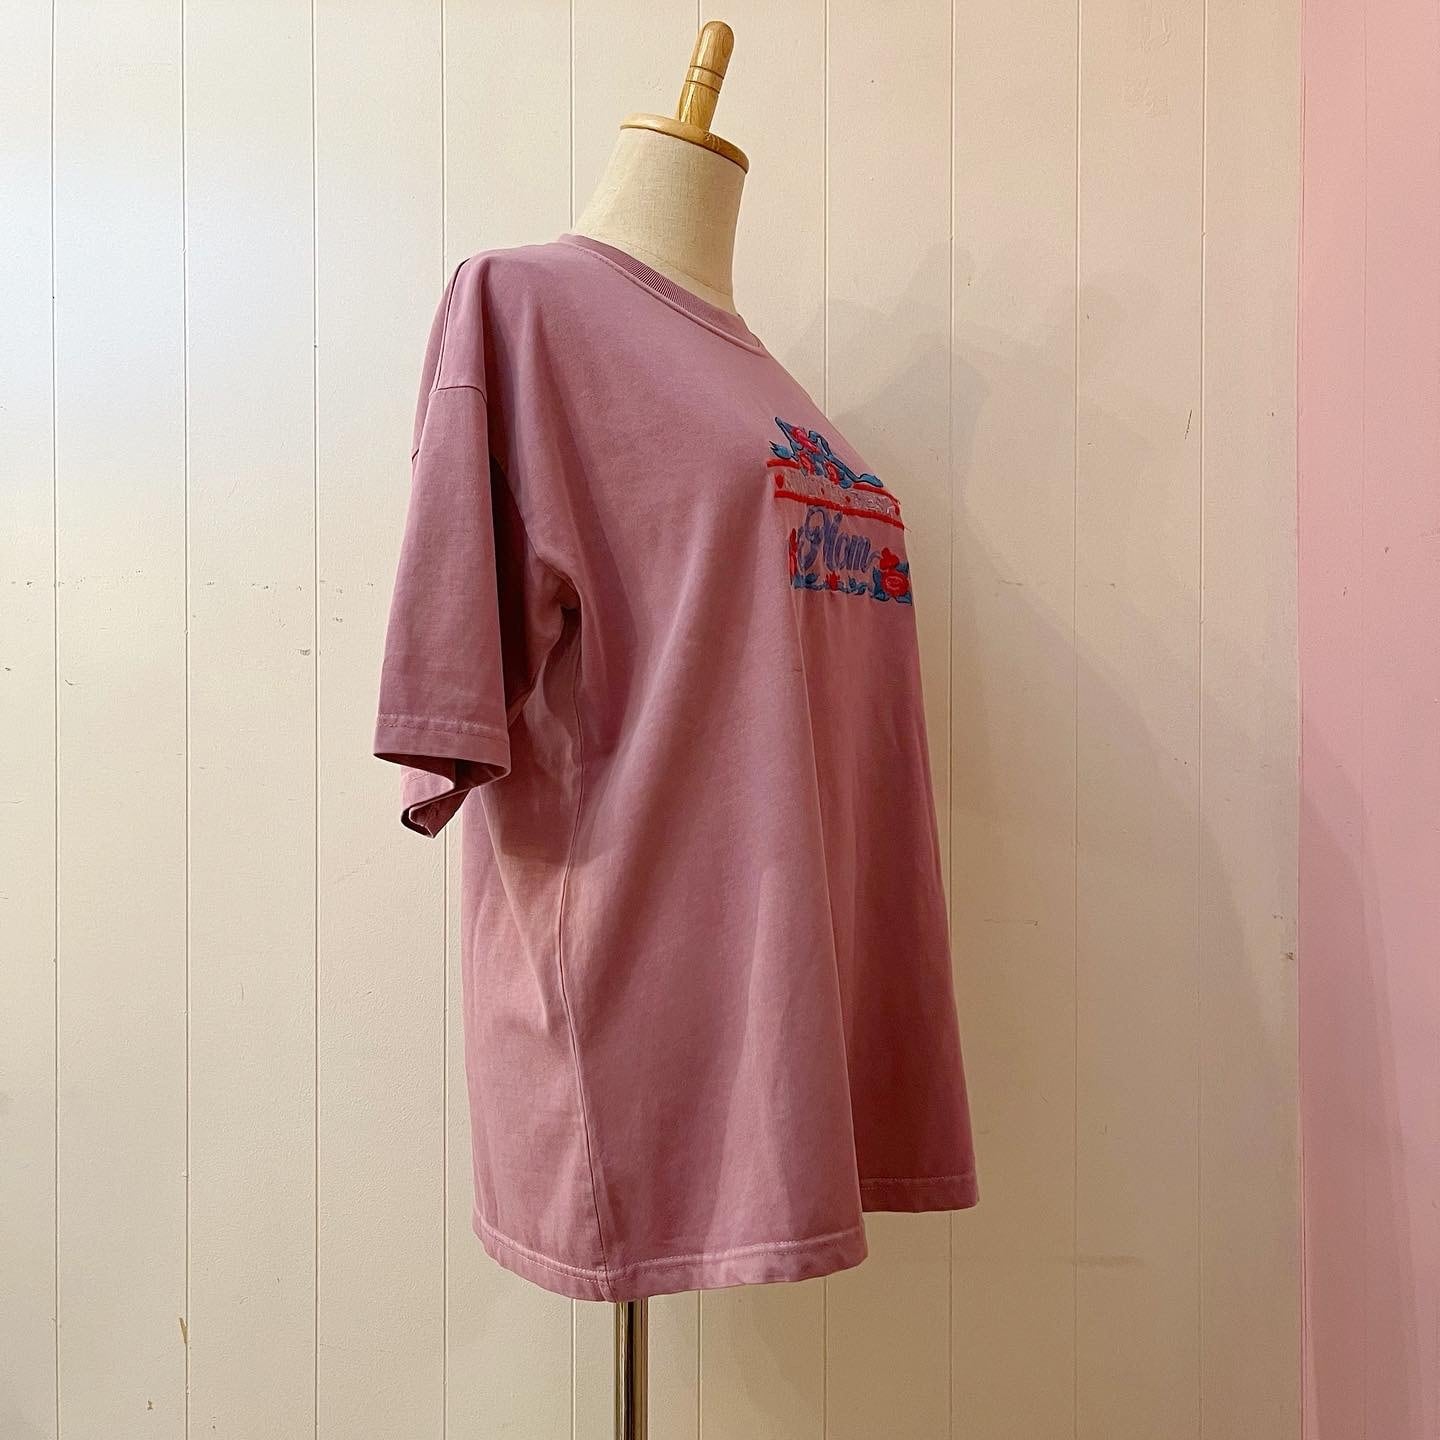 lavender ribbon embroidery T-shirt